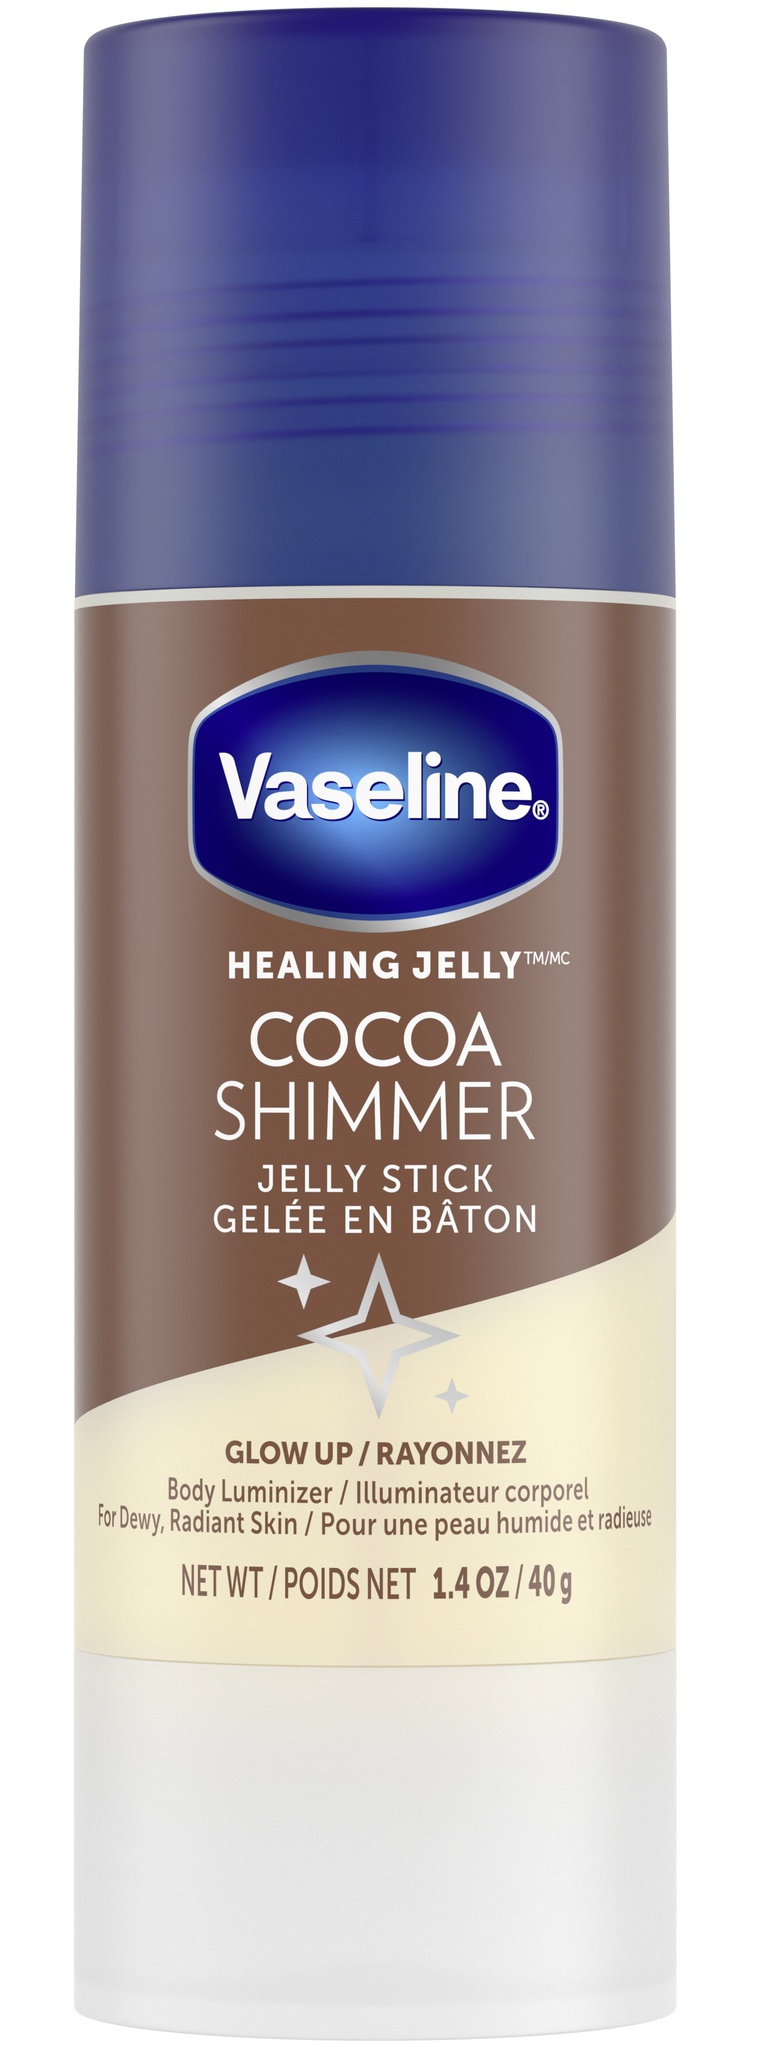 Vaseline Cocoa Shimmer Jelly Stick